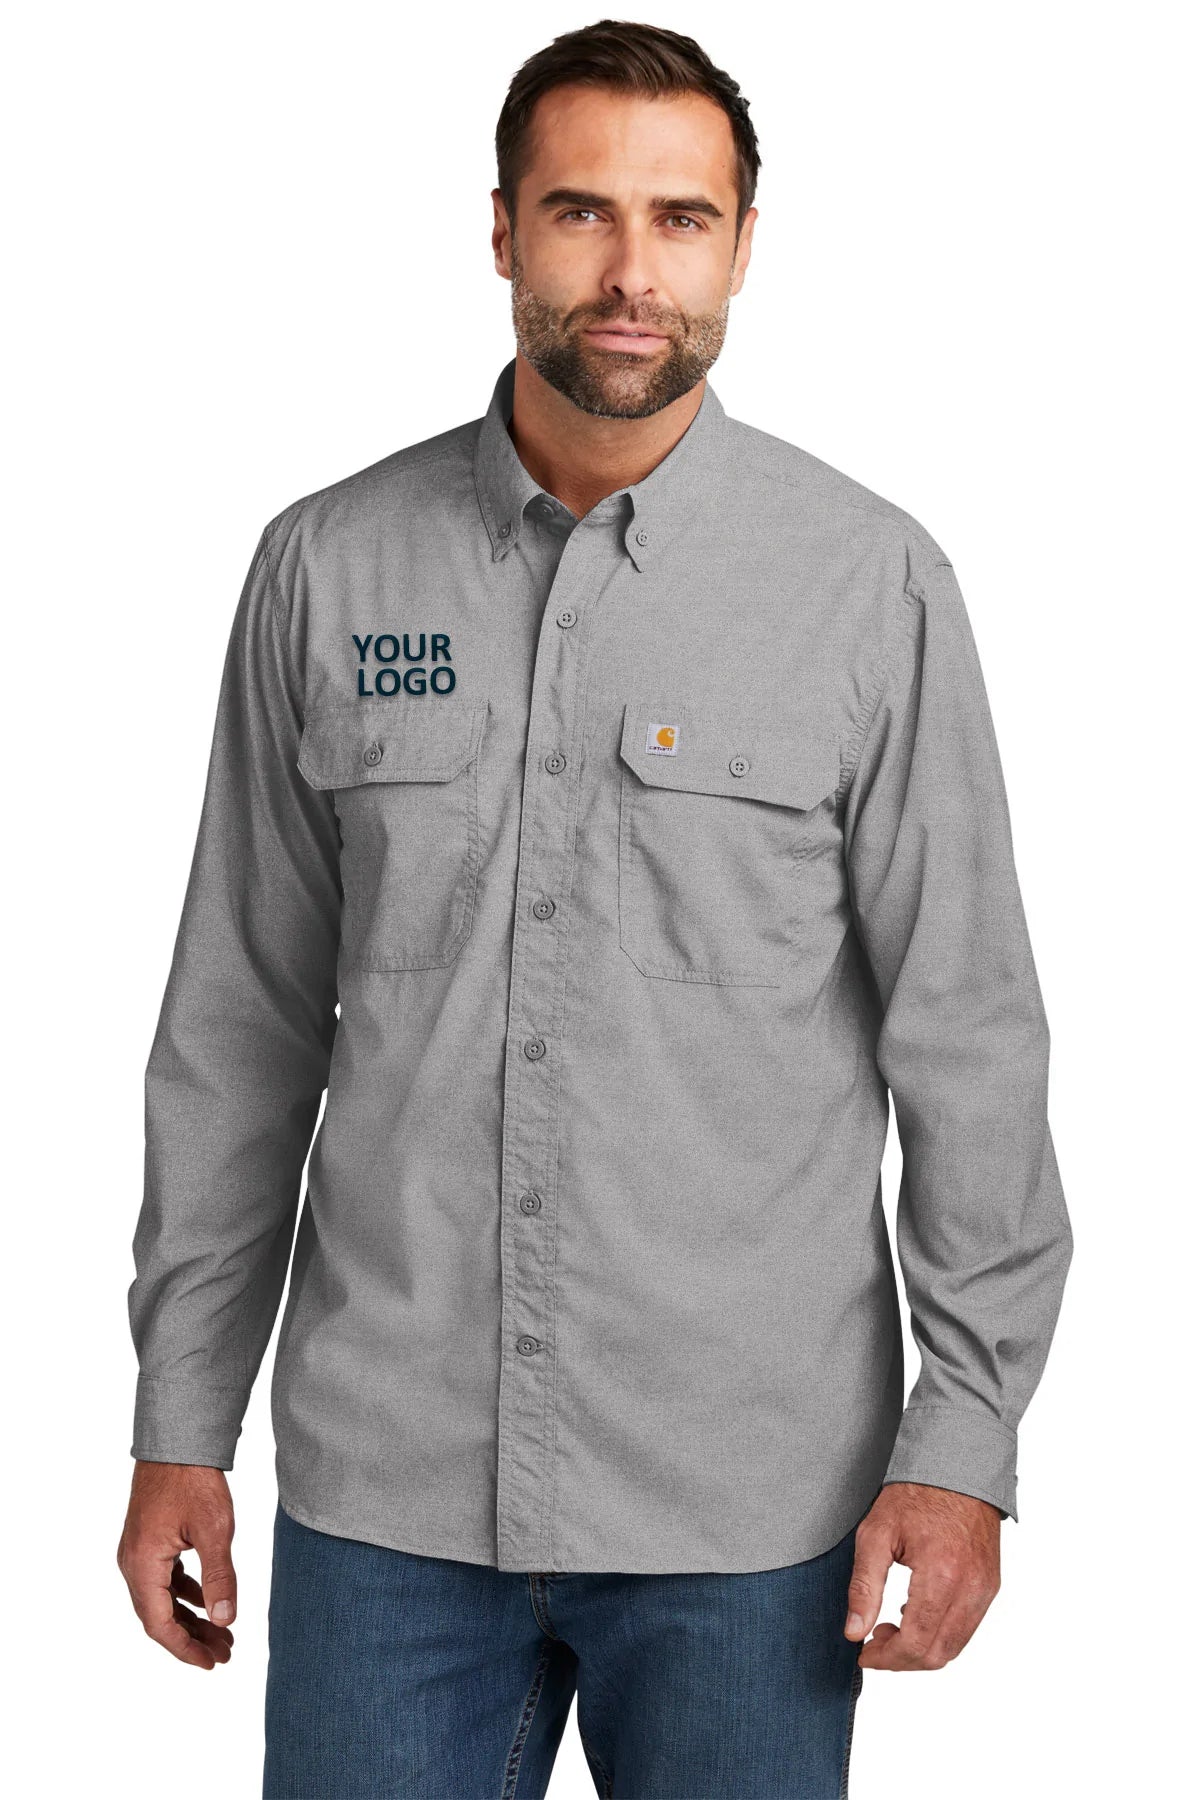 Carhartt Steel CT105291 custom logo shirts